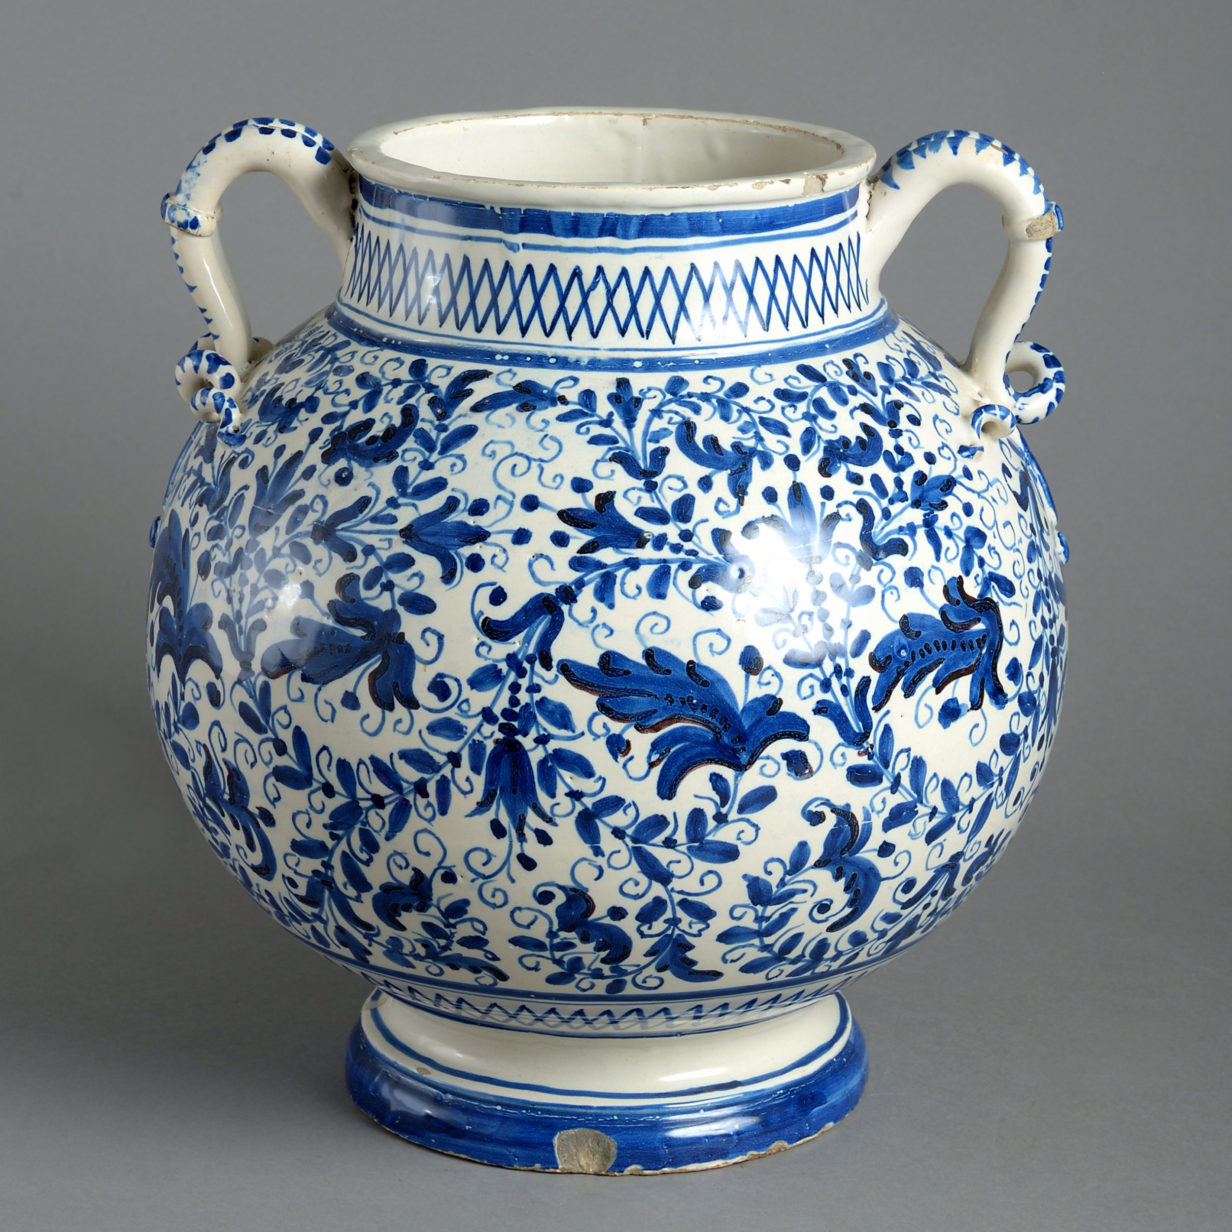 A 17th century blue & white maiolica vase